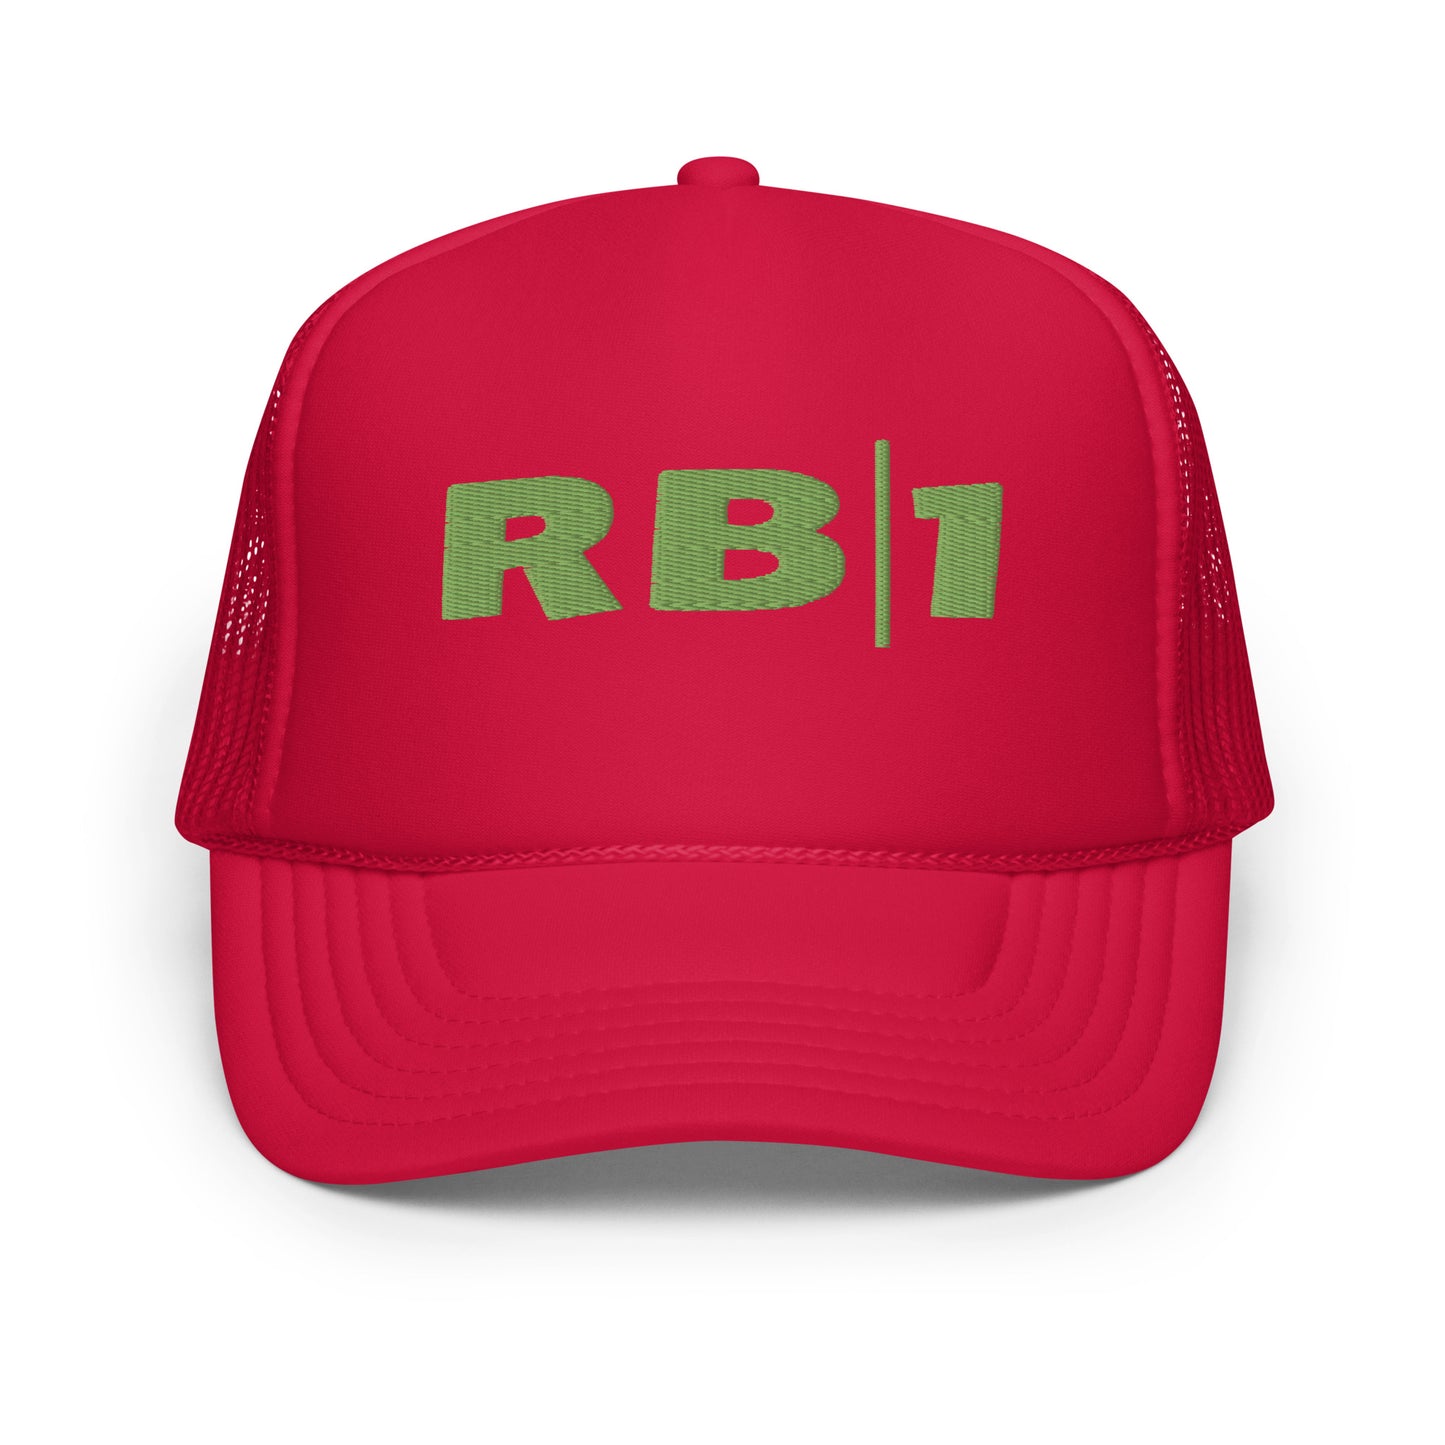 RBA - "RB|1" Kiwi Green Logo